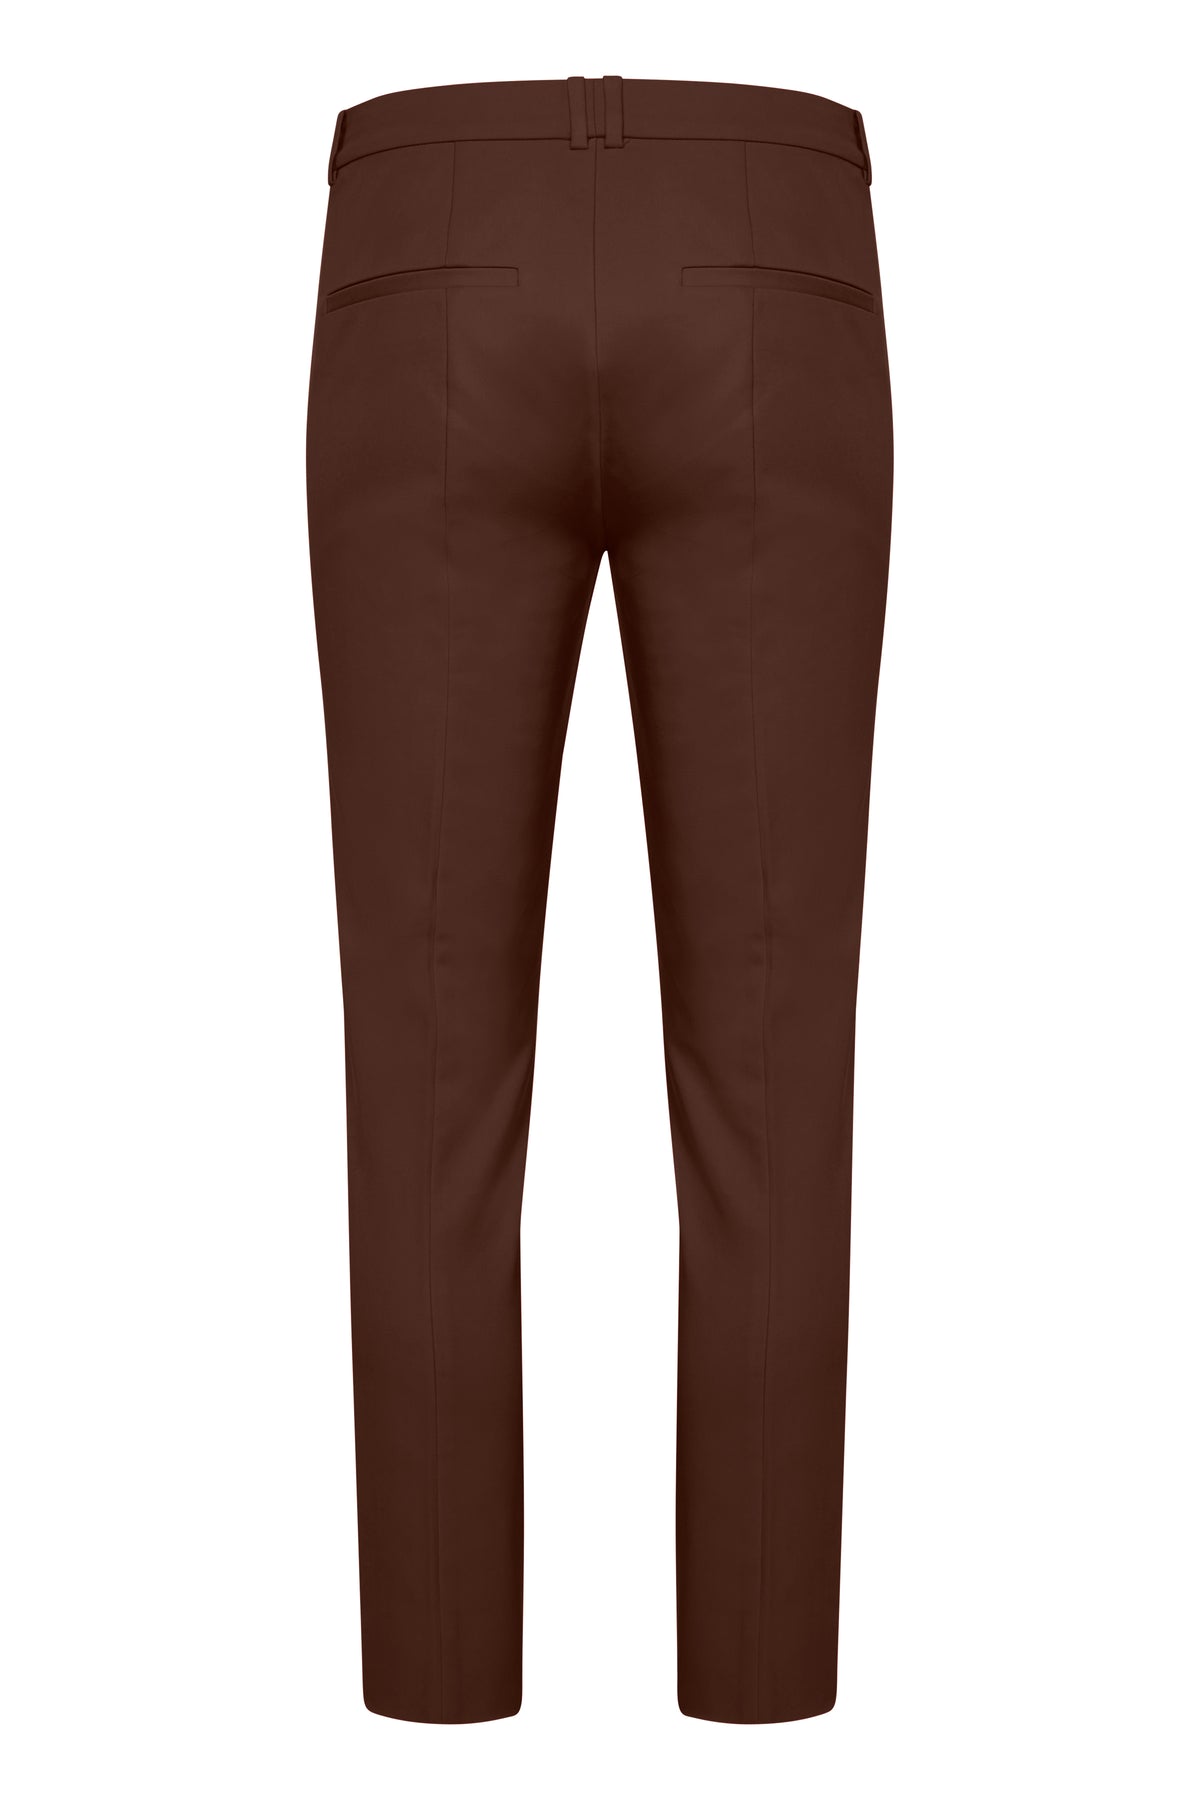 InWear Zella Coffee Brown Trousers, 30103749